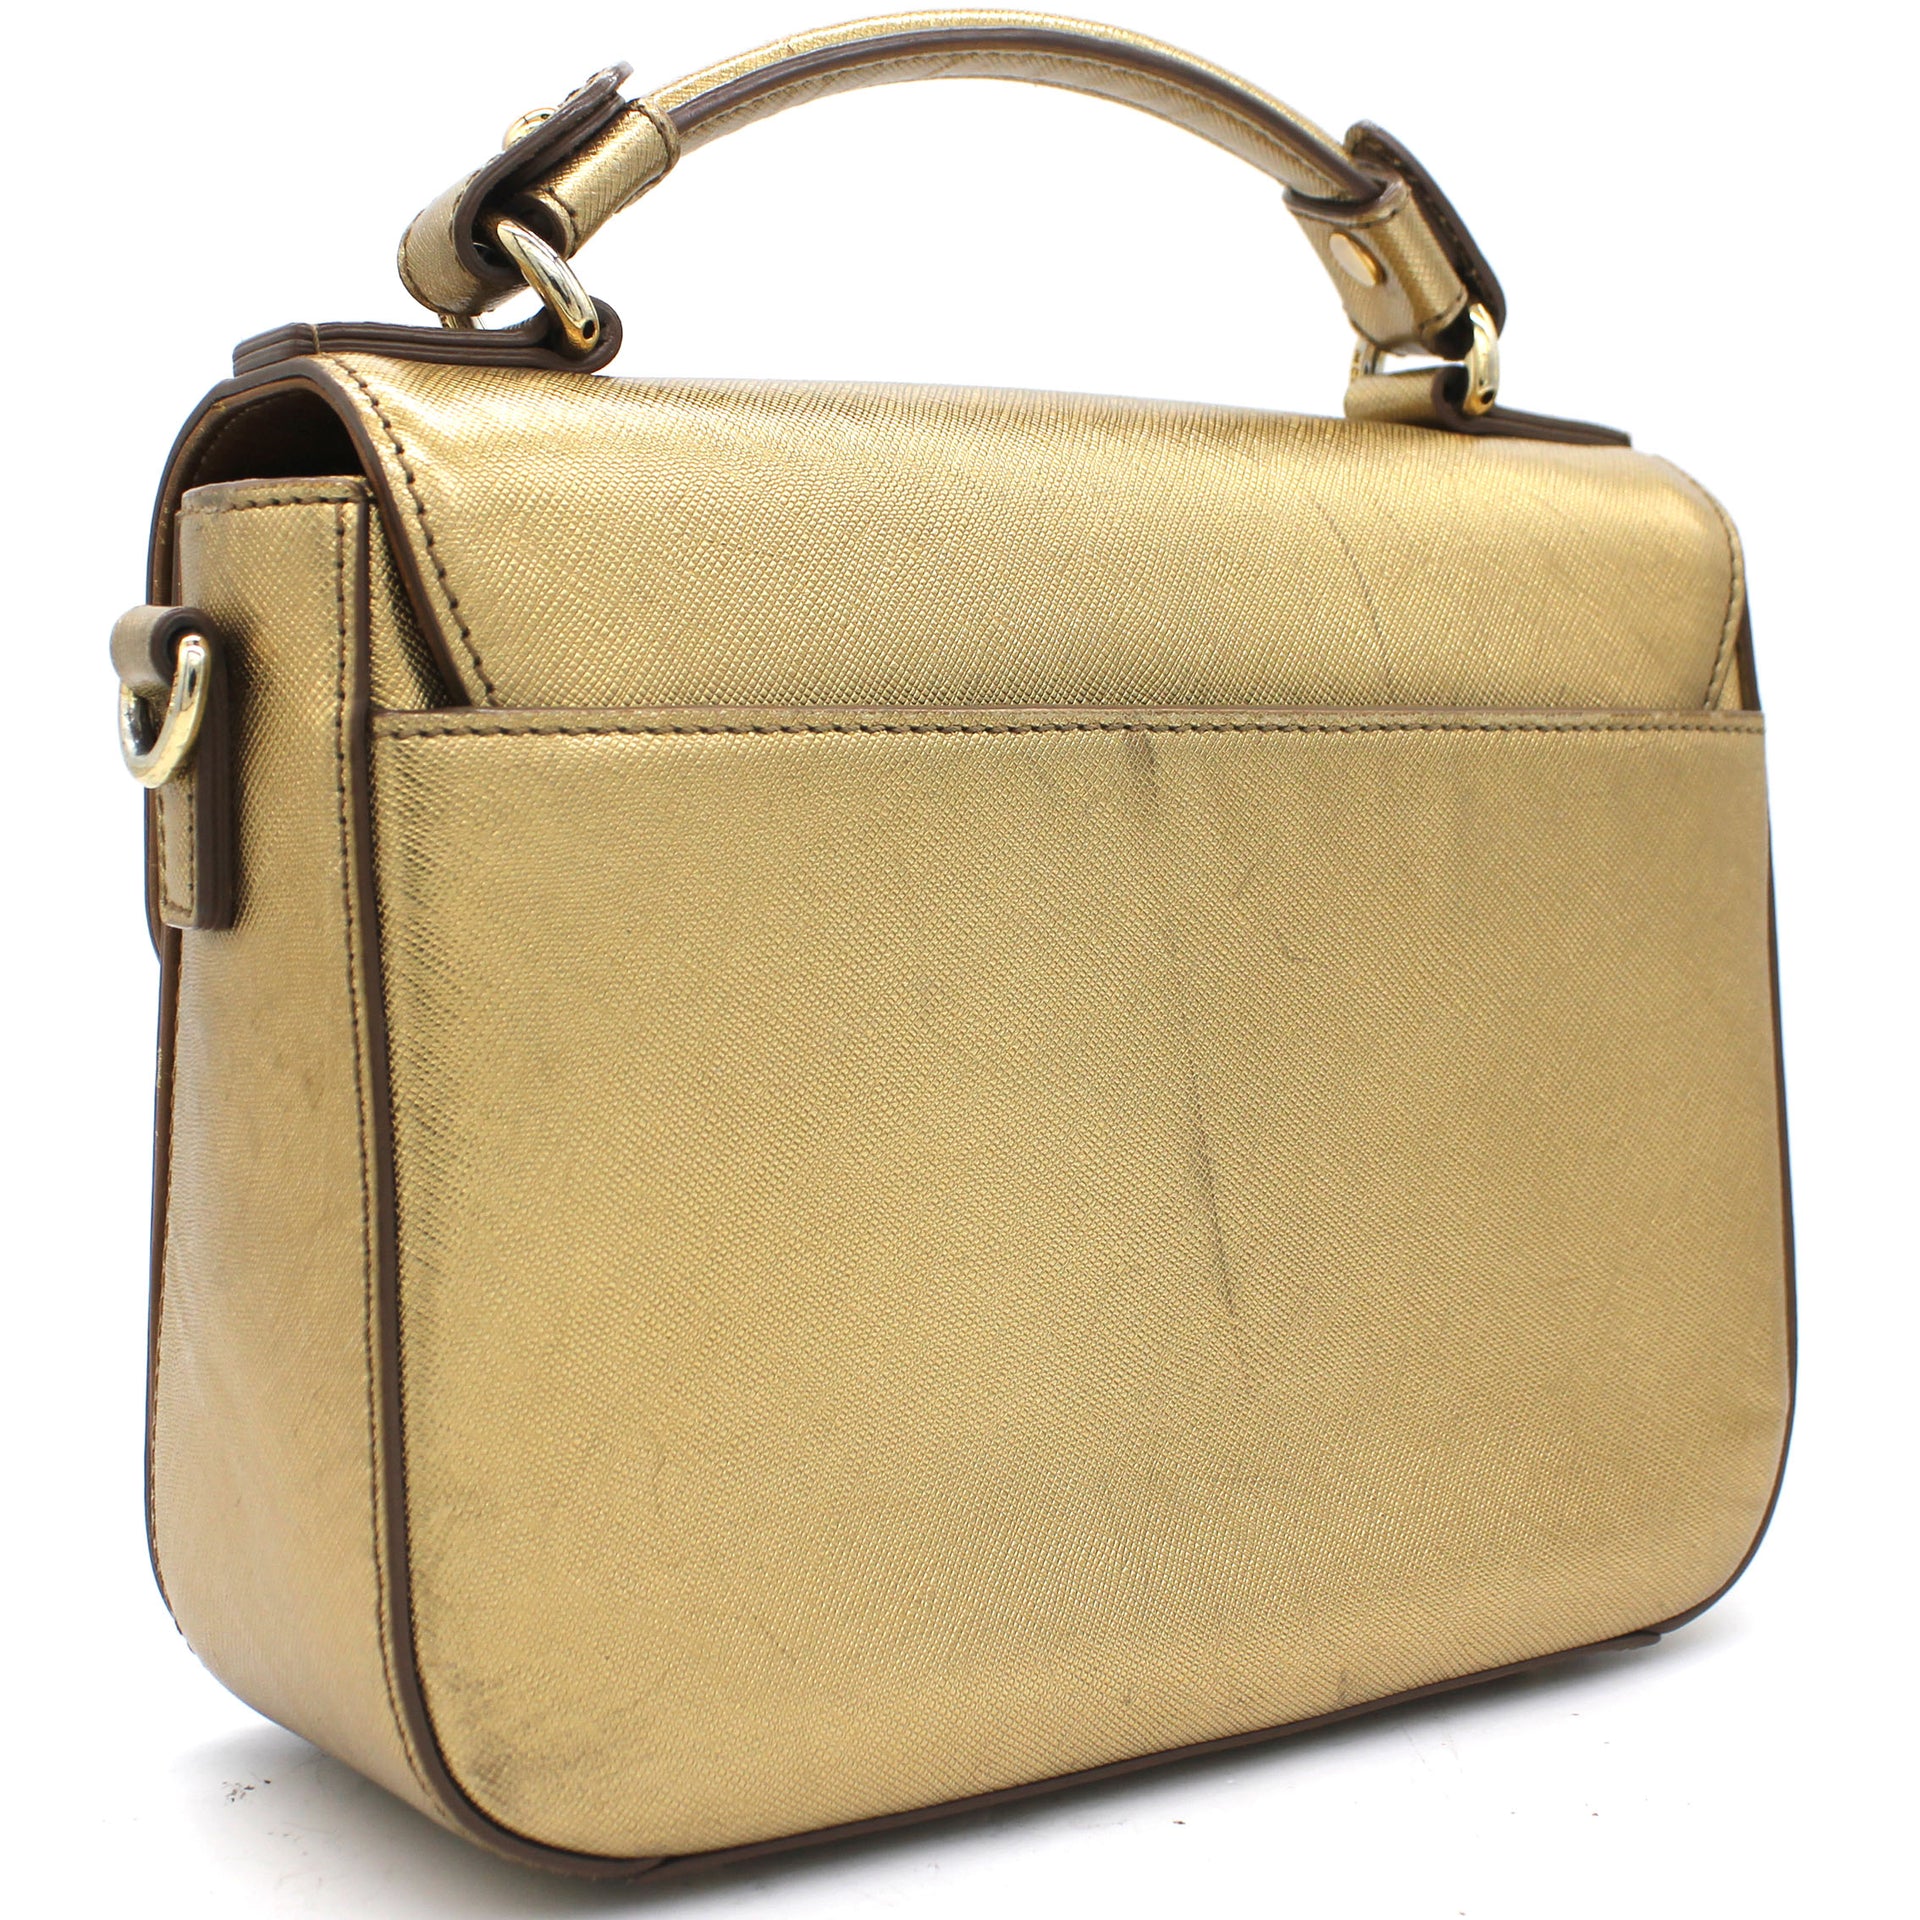 Metallic Gold Leather Flap Top Handle Bag